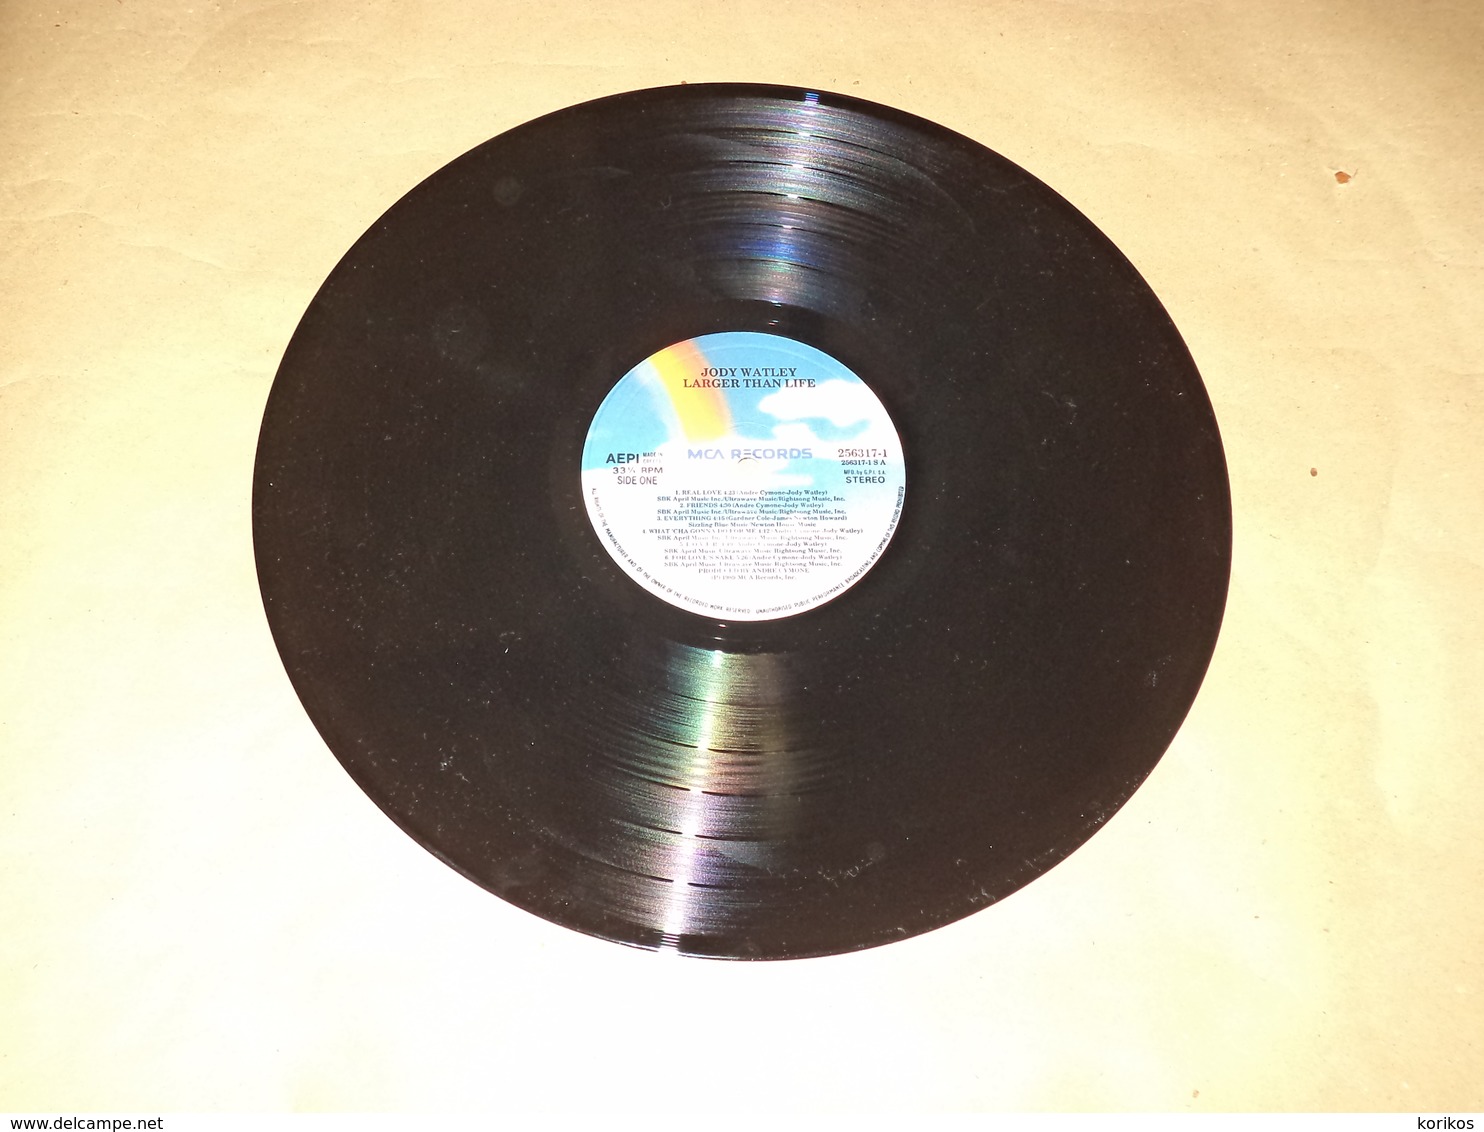 JODY WATLEY – LARGER THAN LIFE – MCA RECORDS – VINYL - 256317-1 – MUSIC – 1989 - GREEK EDITION - Soul - R&B